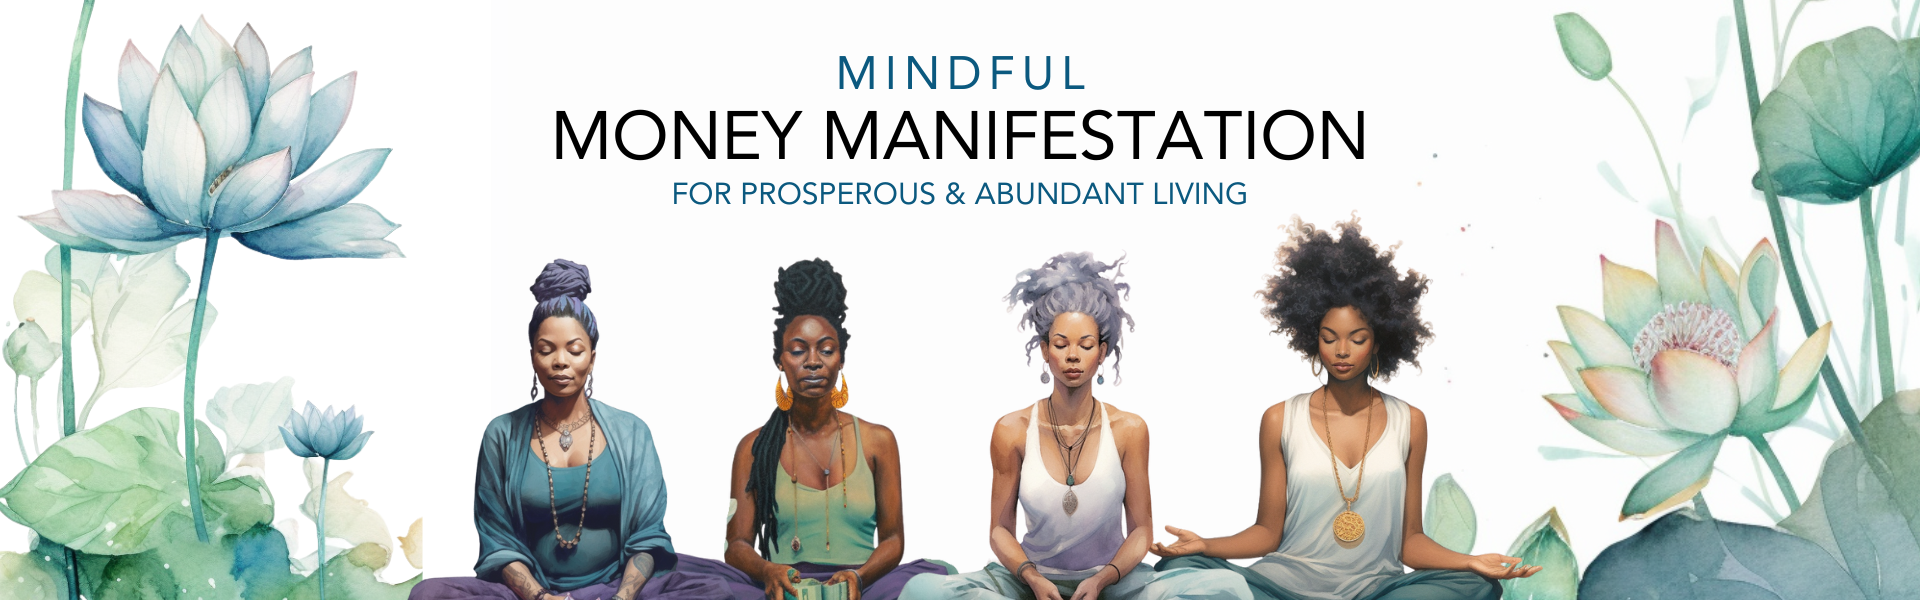 NEW BOOK - 21 Mindful Money Mantras for Prosperous and Abundant Living by Rhonda Davis